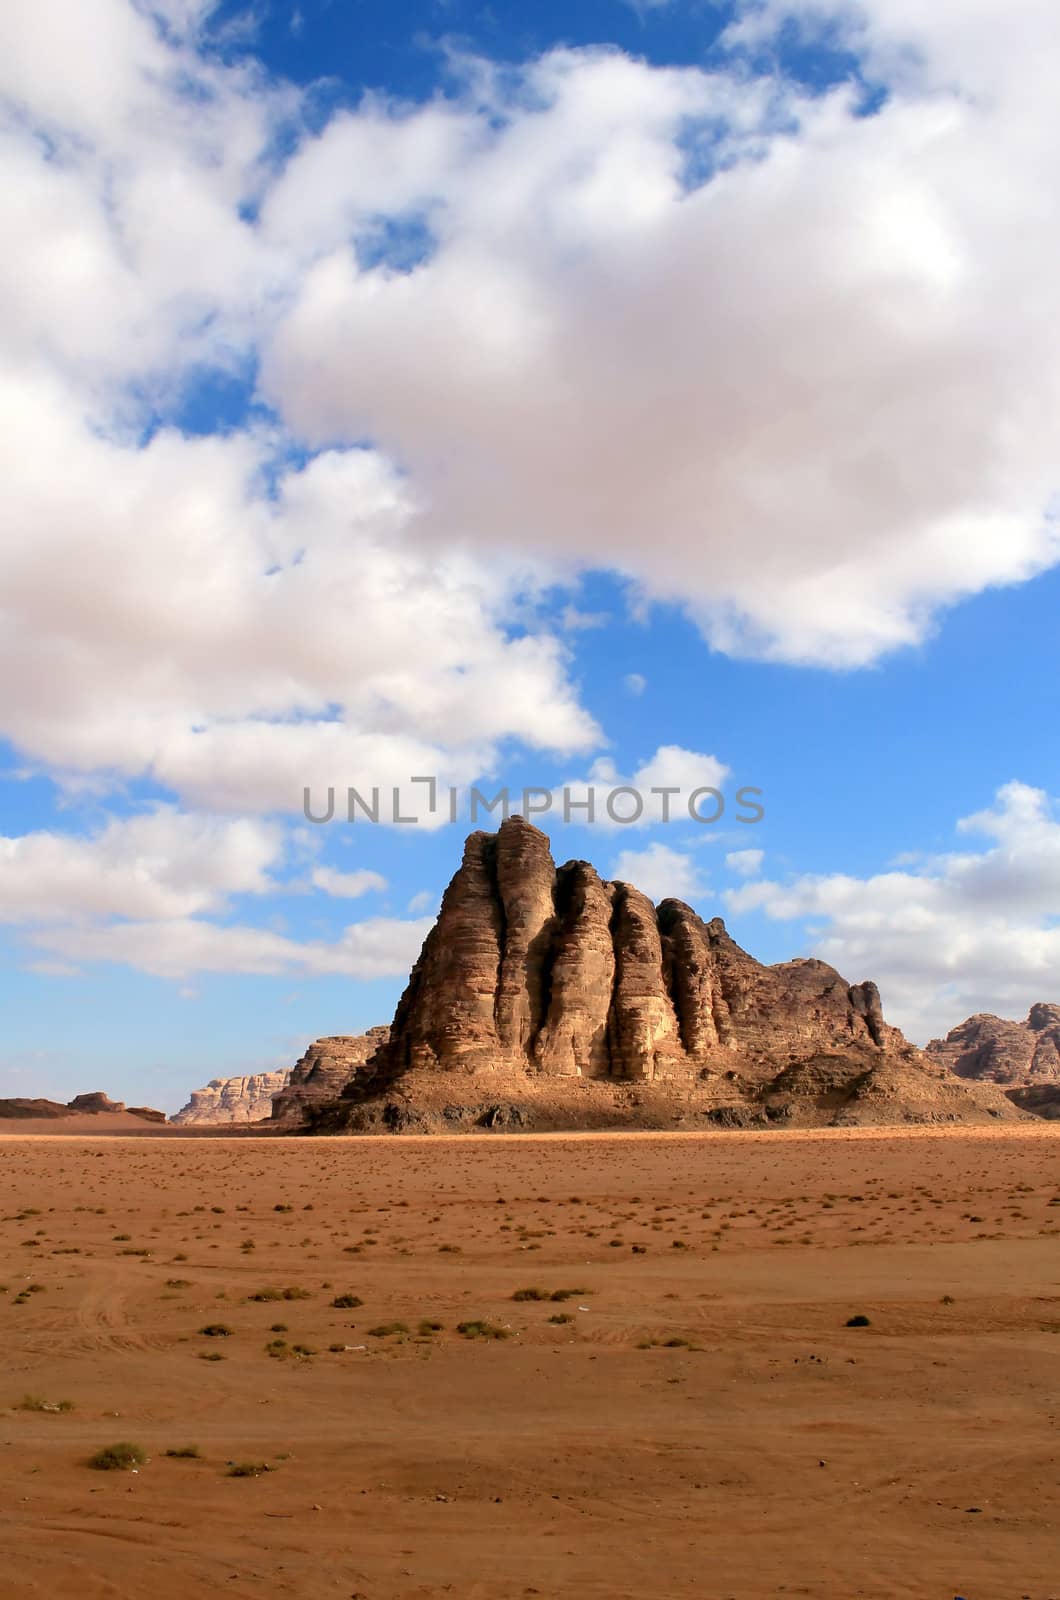 The "Seven Pillars of Wisdom" rock formation, Wadi Rum Desert be by ptxgarfield